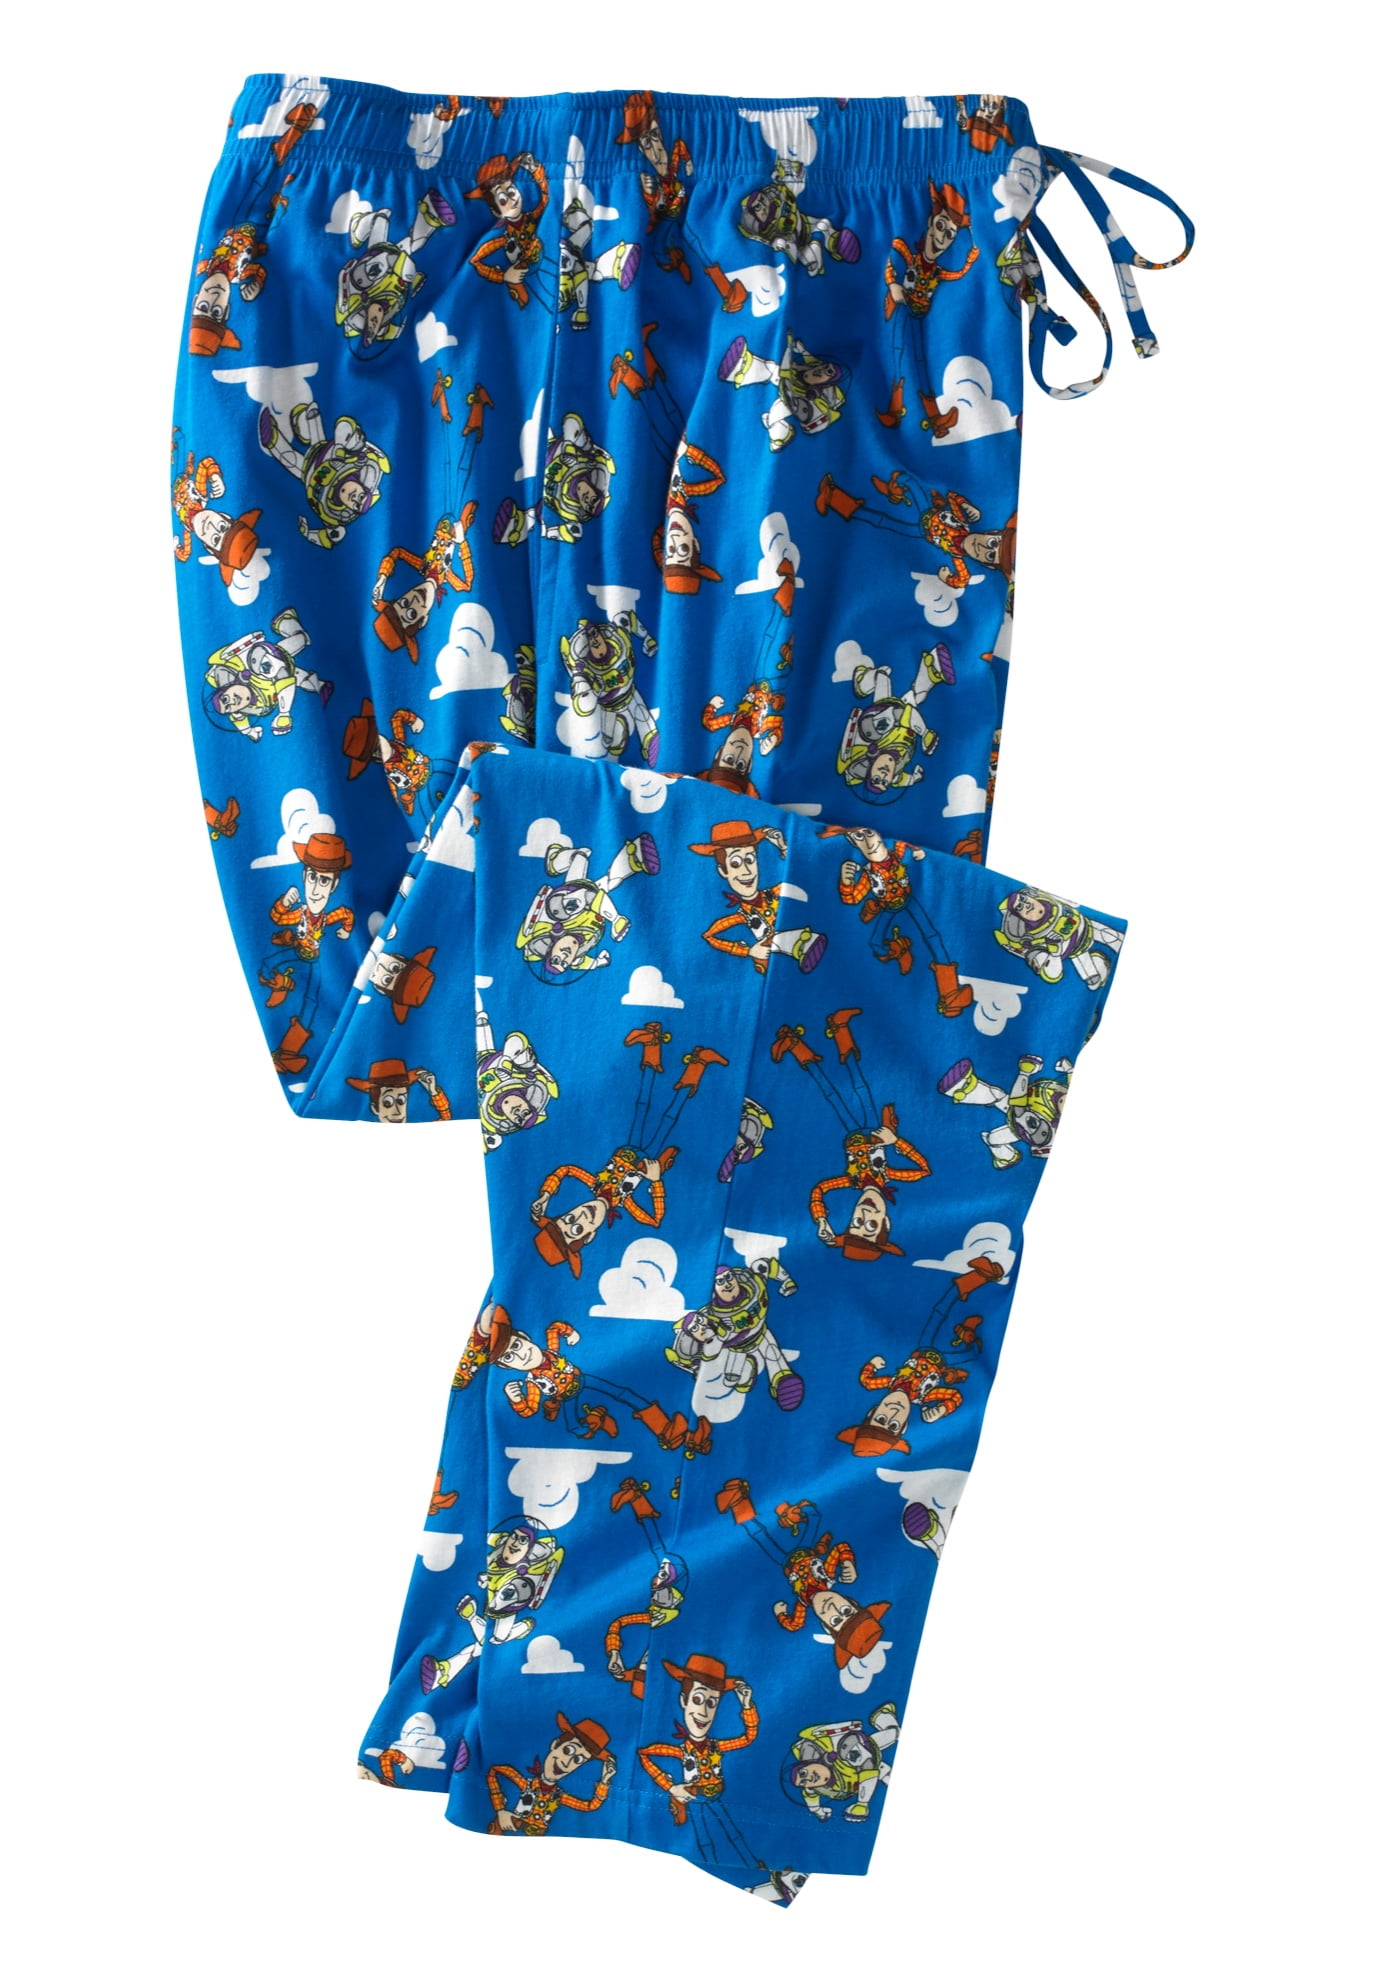 Mens Novelty Pajama Sets ~ Amazon.com: Men's Novelty Pajama Bottoms ...